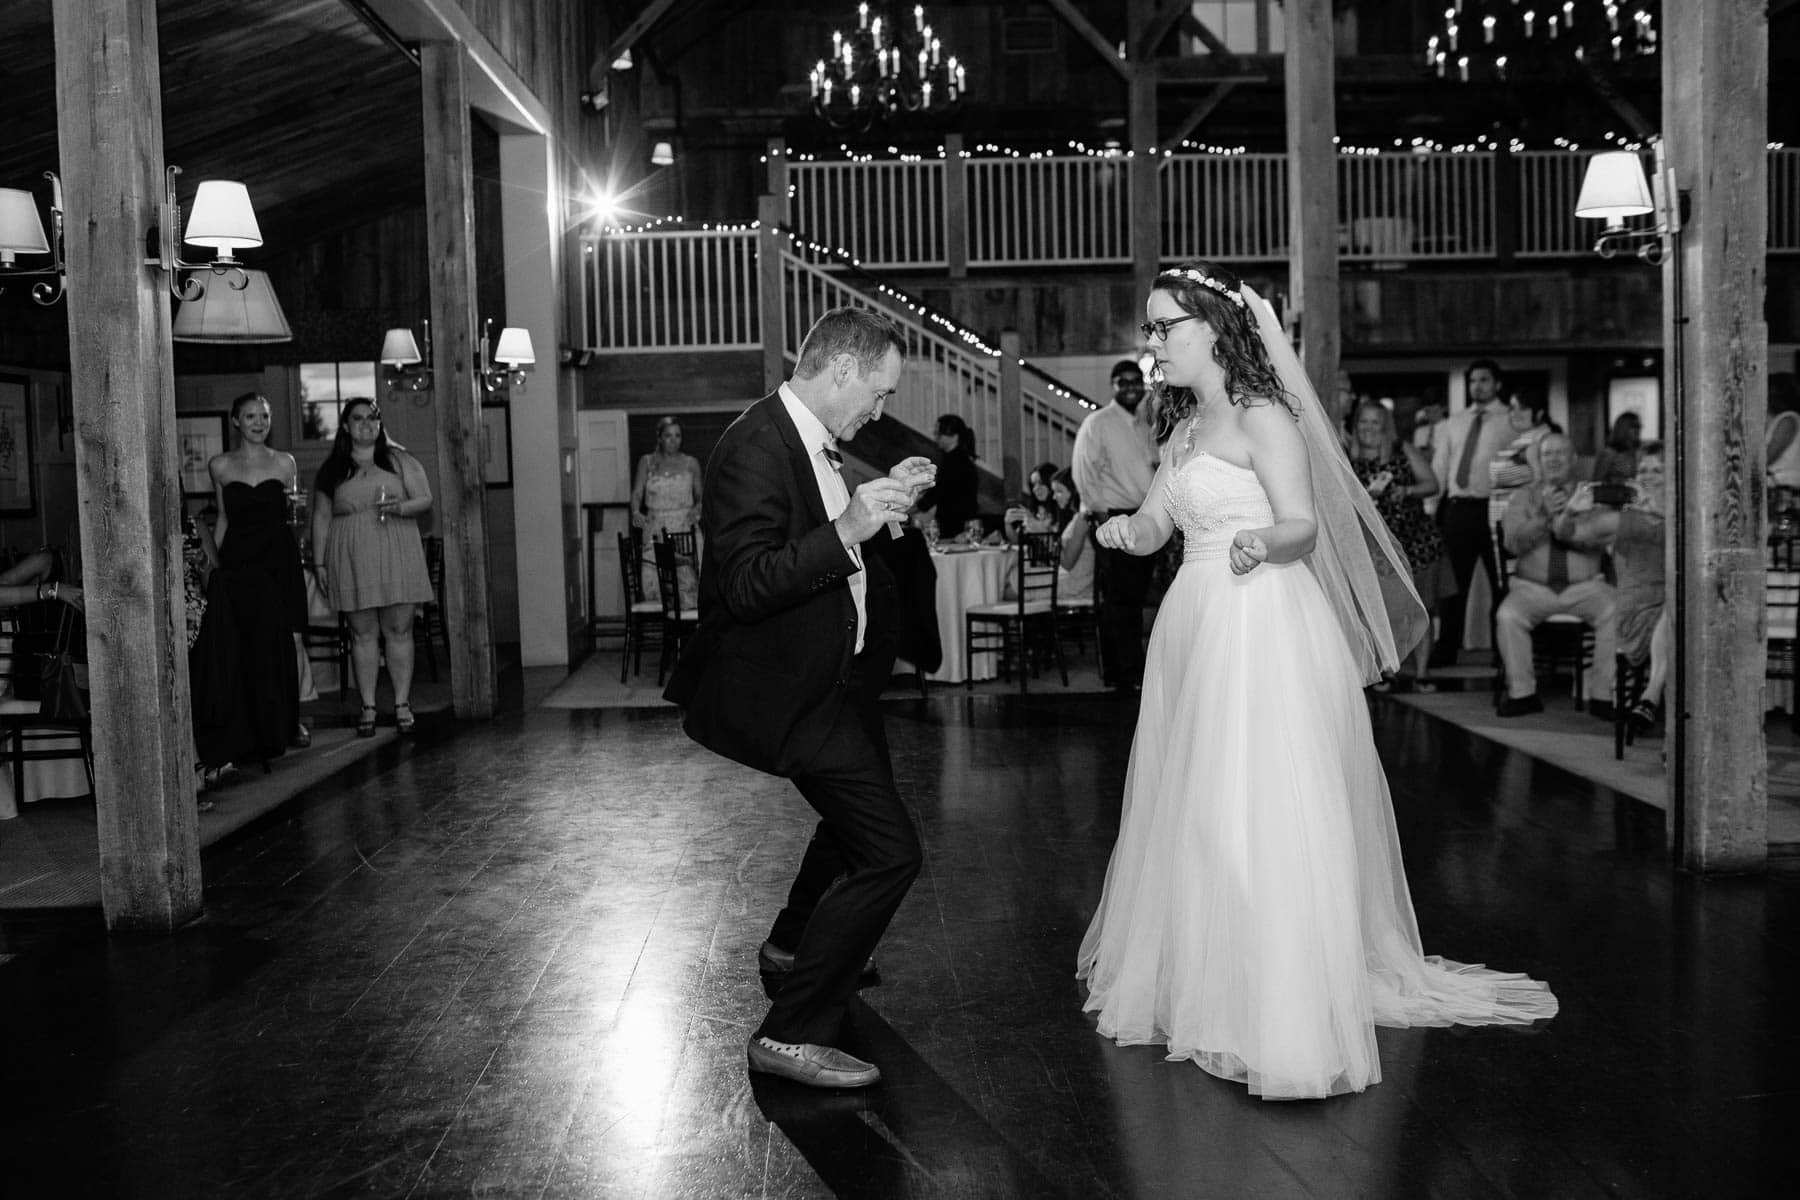 Kelsea and Alberto's Barn at Gibbet Hill wedding in Groton, MA | Kelly Benvenuto Photography | Boston Wedding Photographer